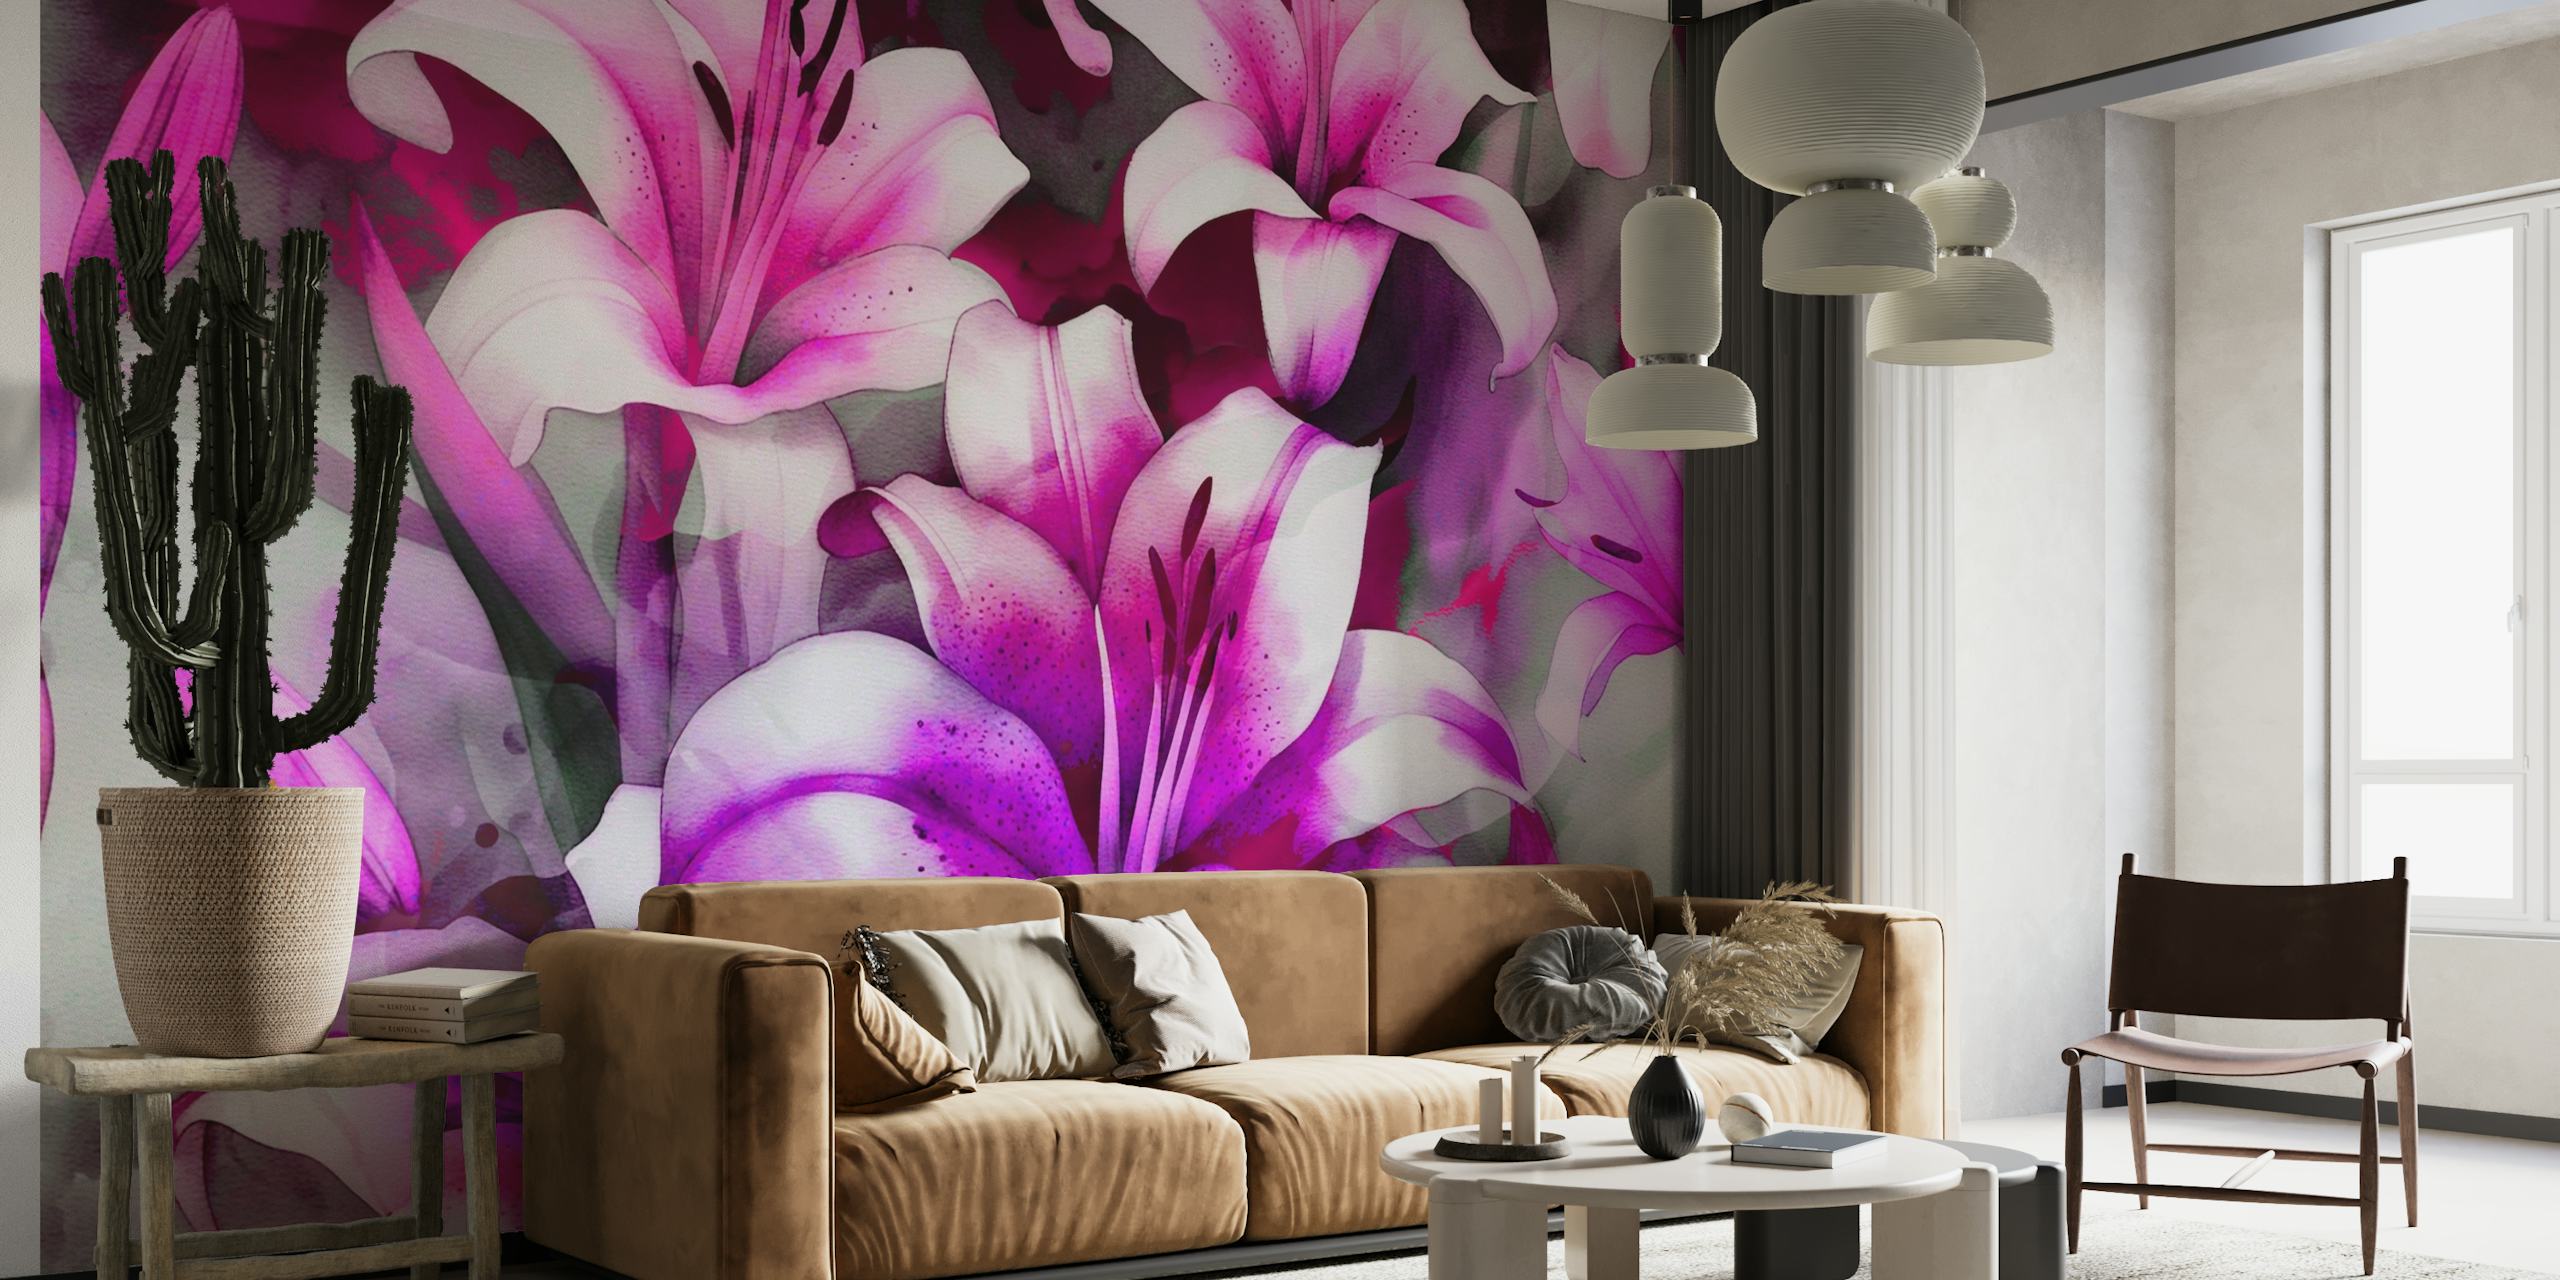 Abstraktes Aquarell-Wandbild aus rosa und lila Lilien mit einer verträumten Ästhetik